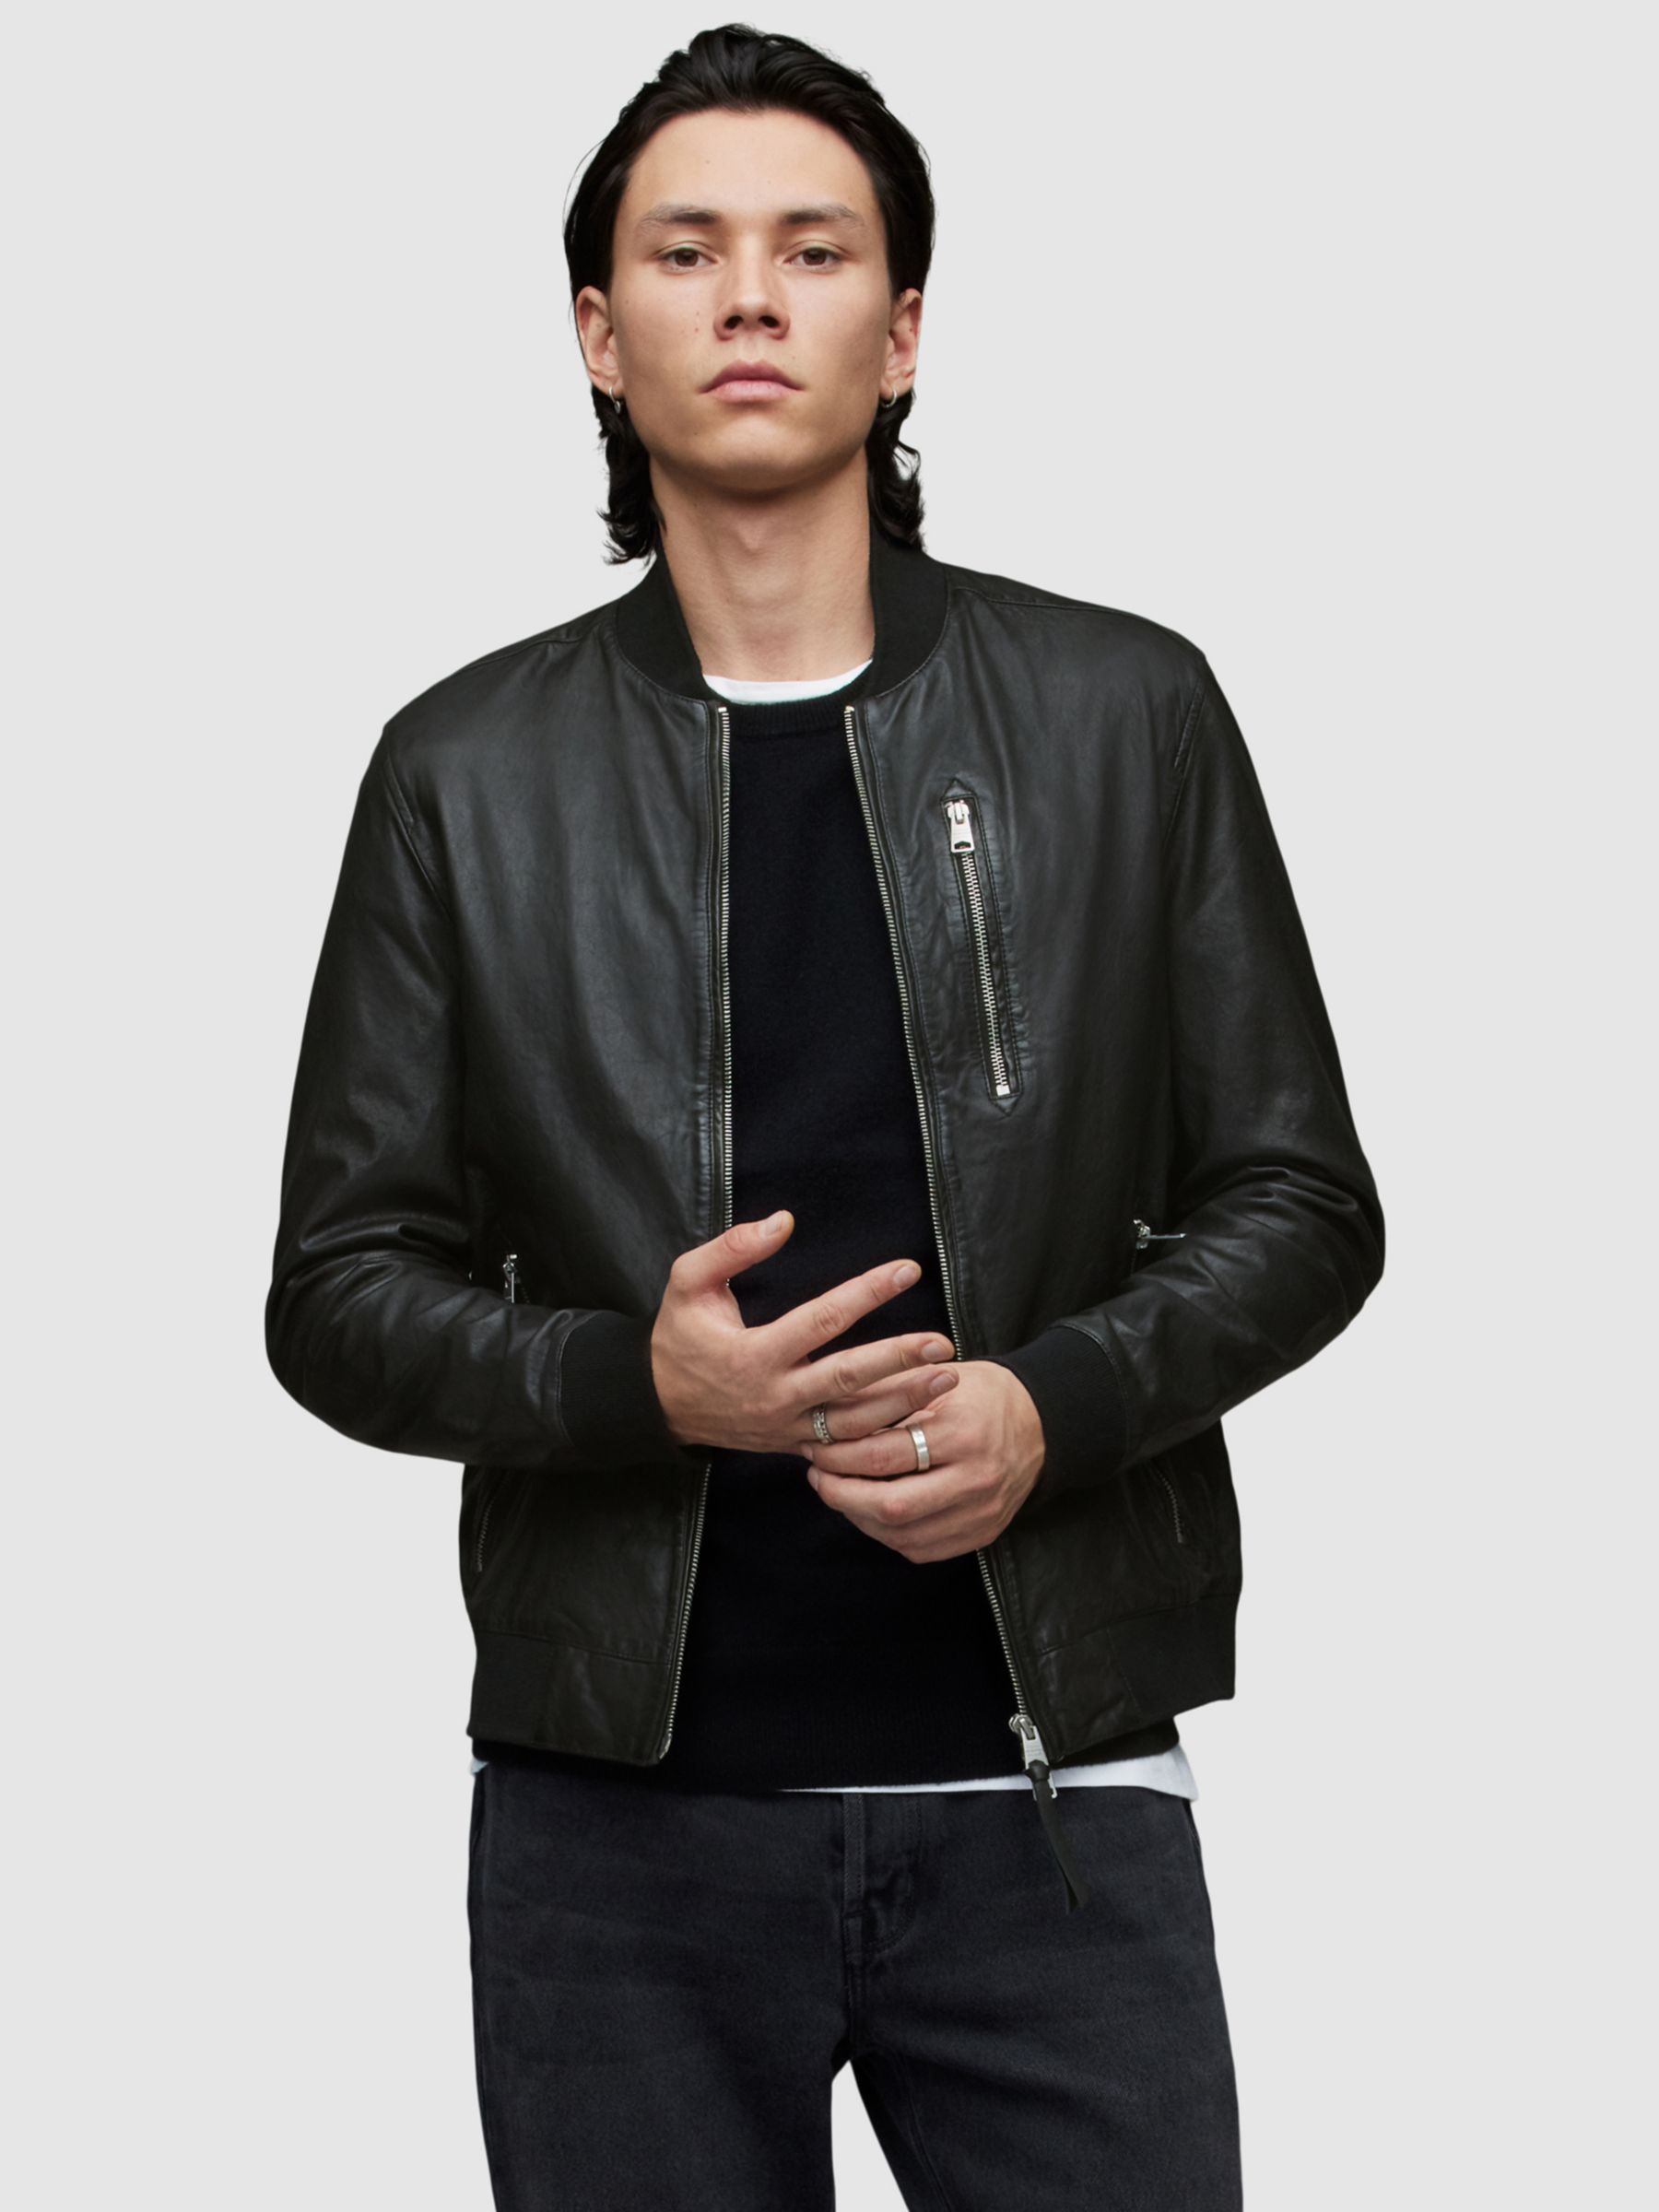 Gucci Leather Bomber Jacket, Size 50 It, Black, Ready-to-wear